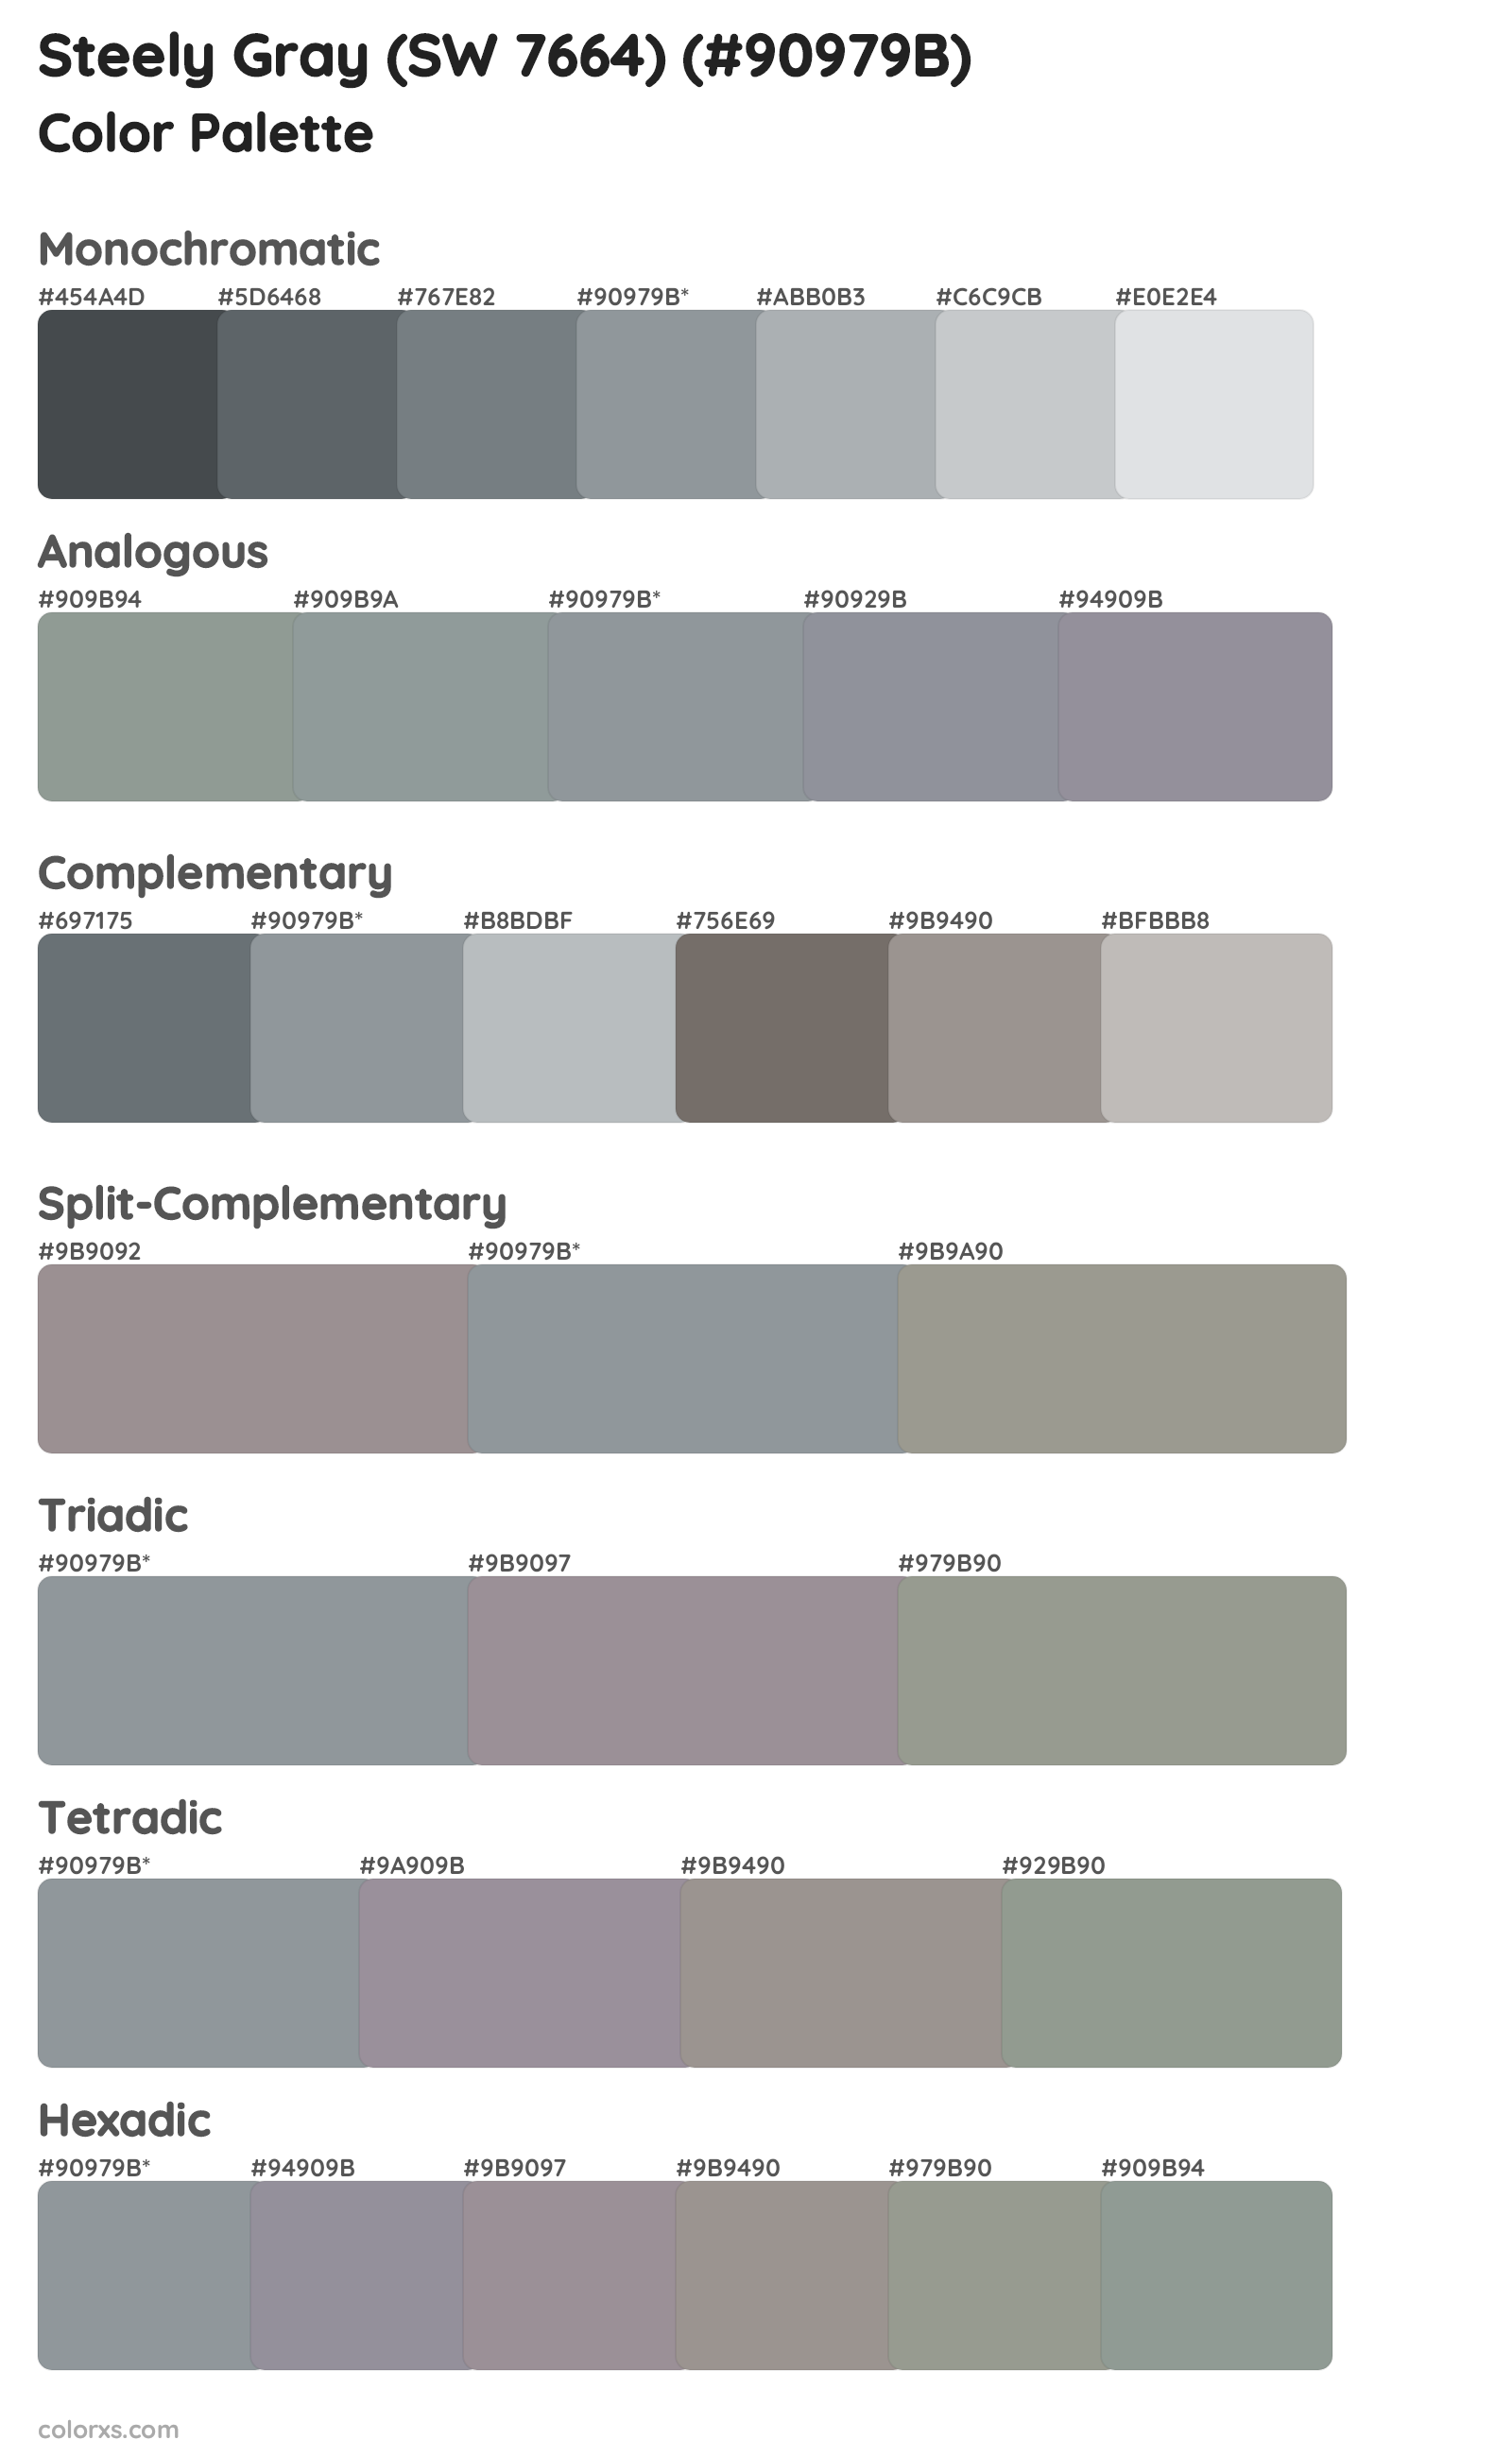 Steely Gray (SW 7664) Color Scheme Palettes